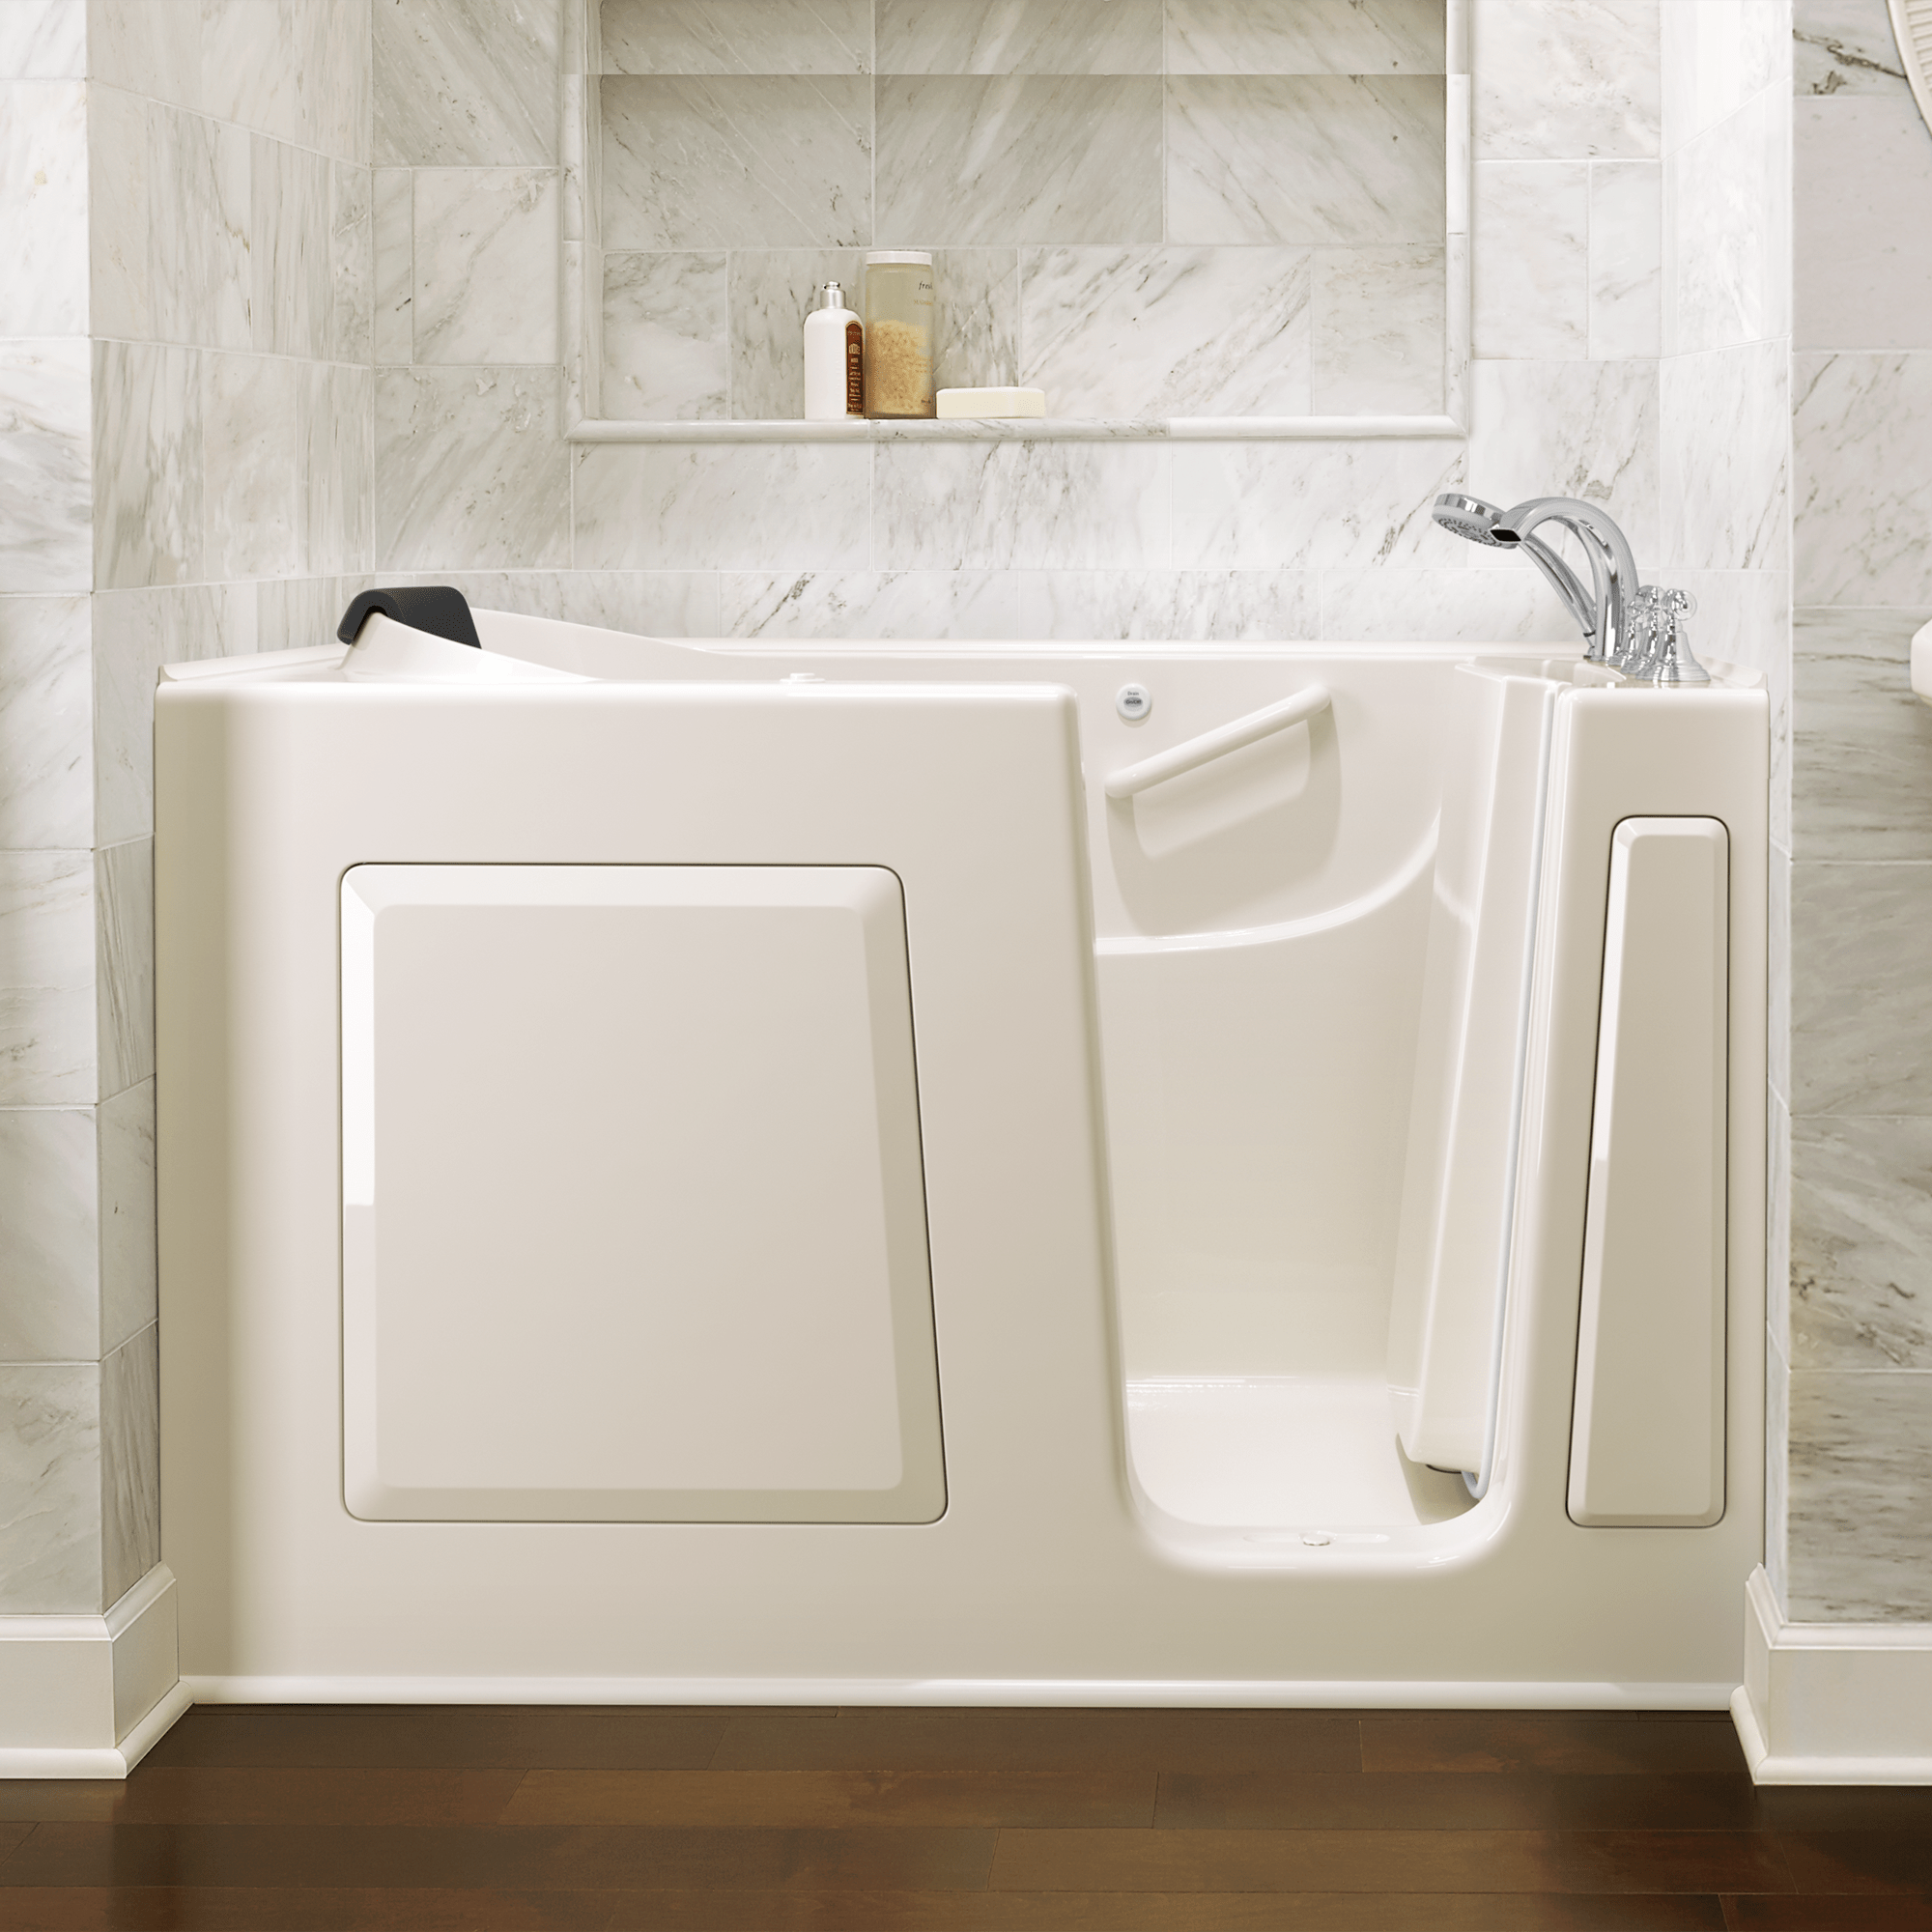 Gelcoat Premium Series 60x30 Inch Walk-In Bathtub with Jet Massage System - Right Hand Door and Drain